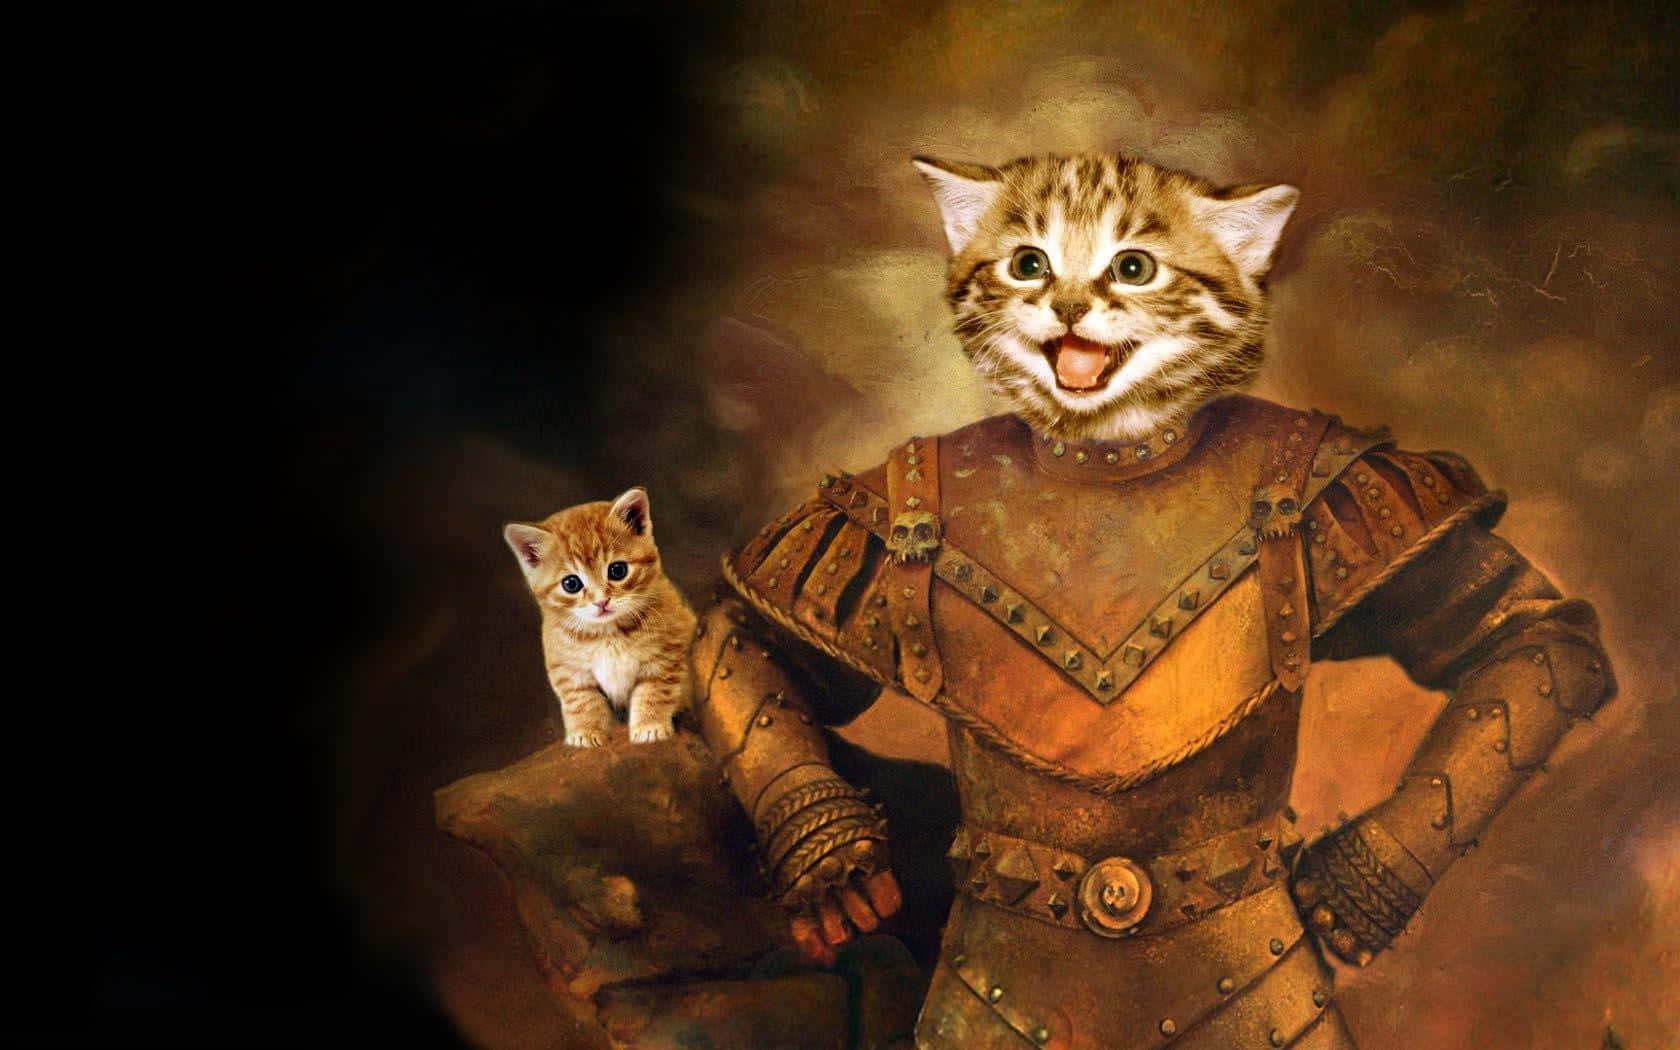 Weird Cat Big Armor Costume Picture